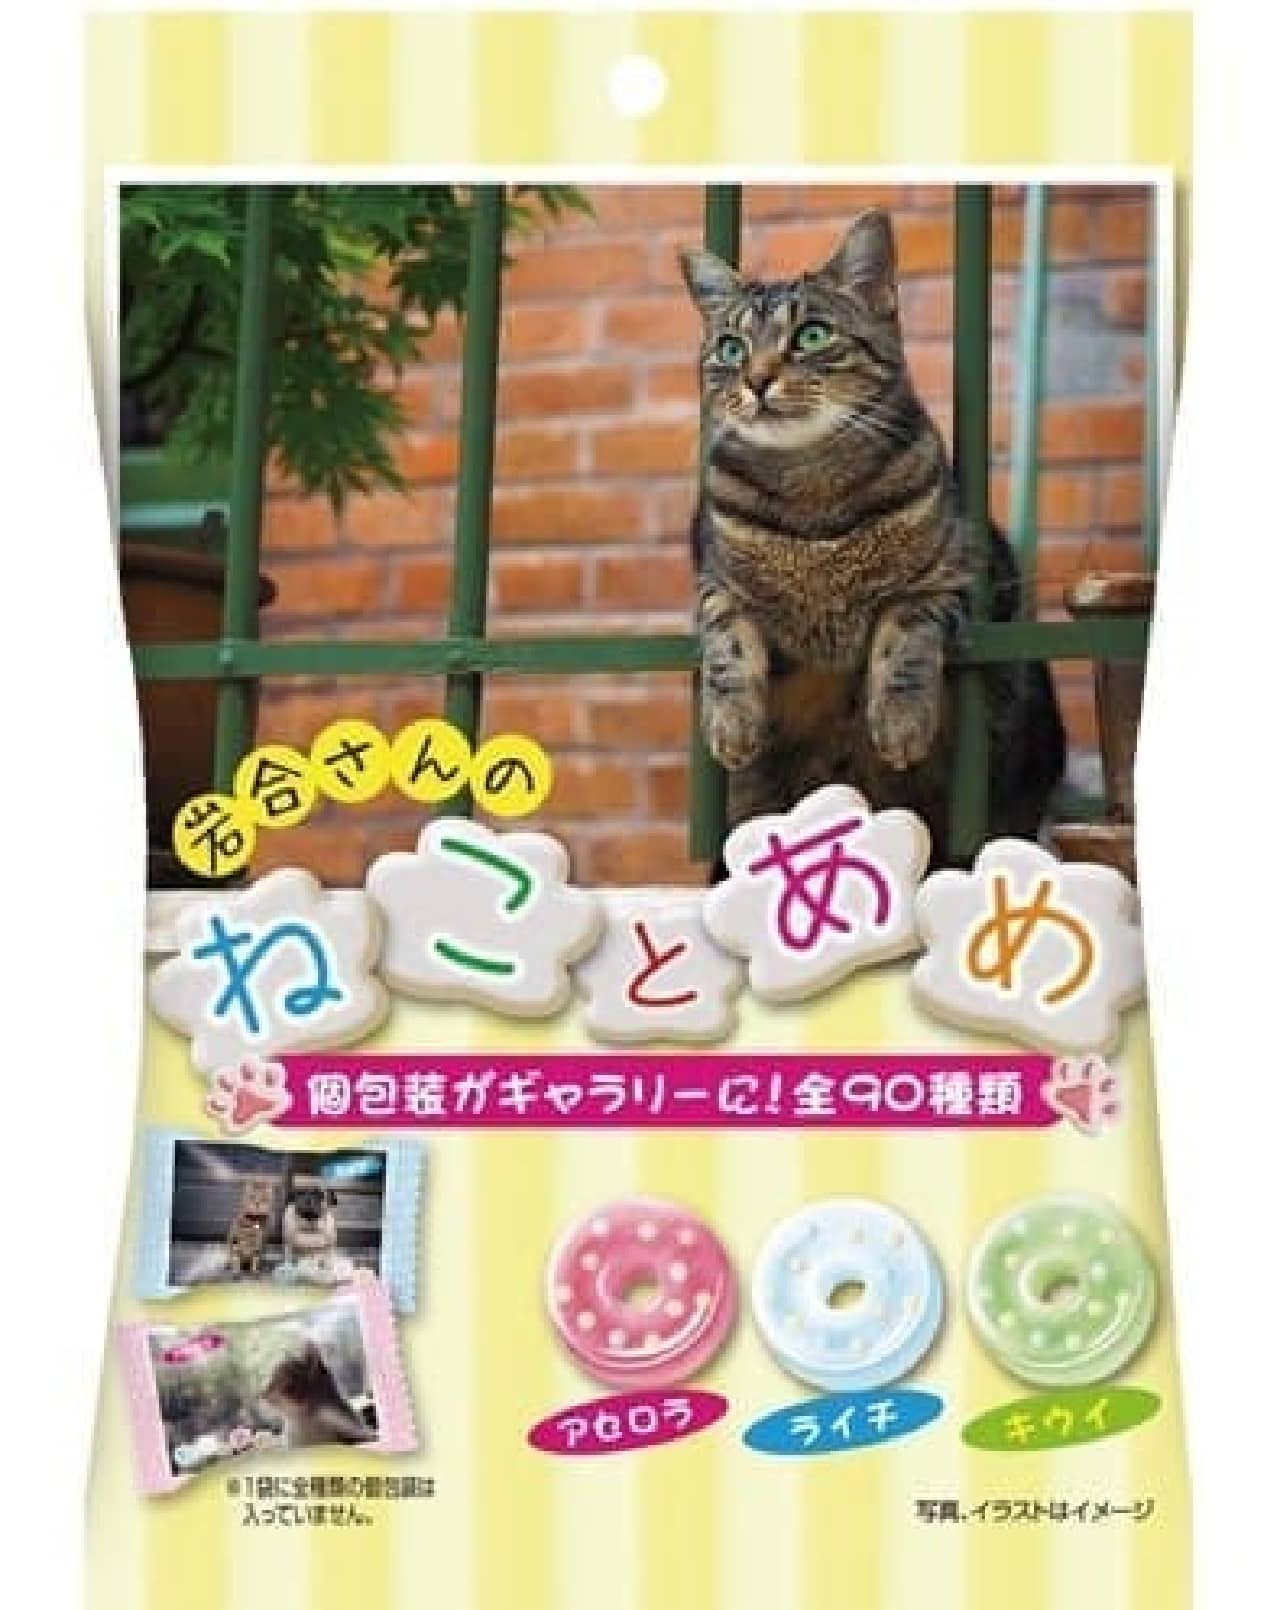 Mitsuaki Iwago's cat photo is packaged Pine Ame's "Nekoto Ame"